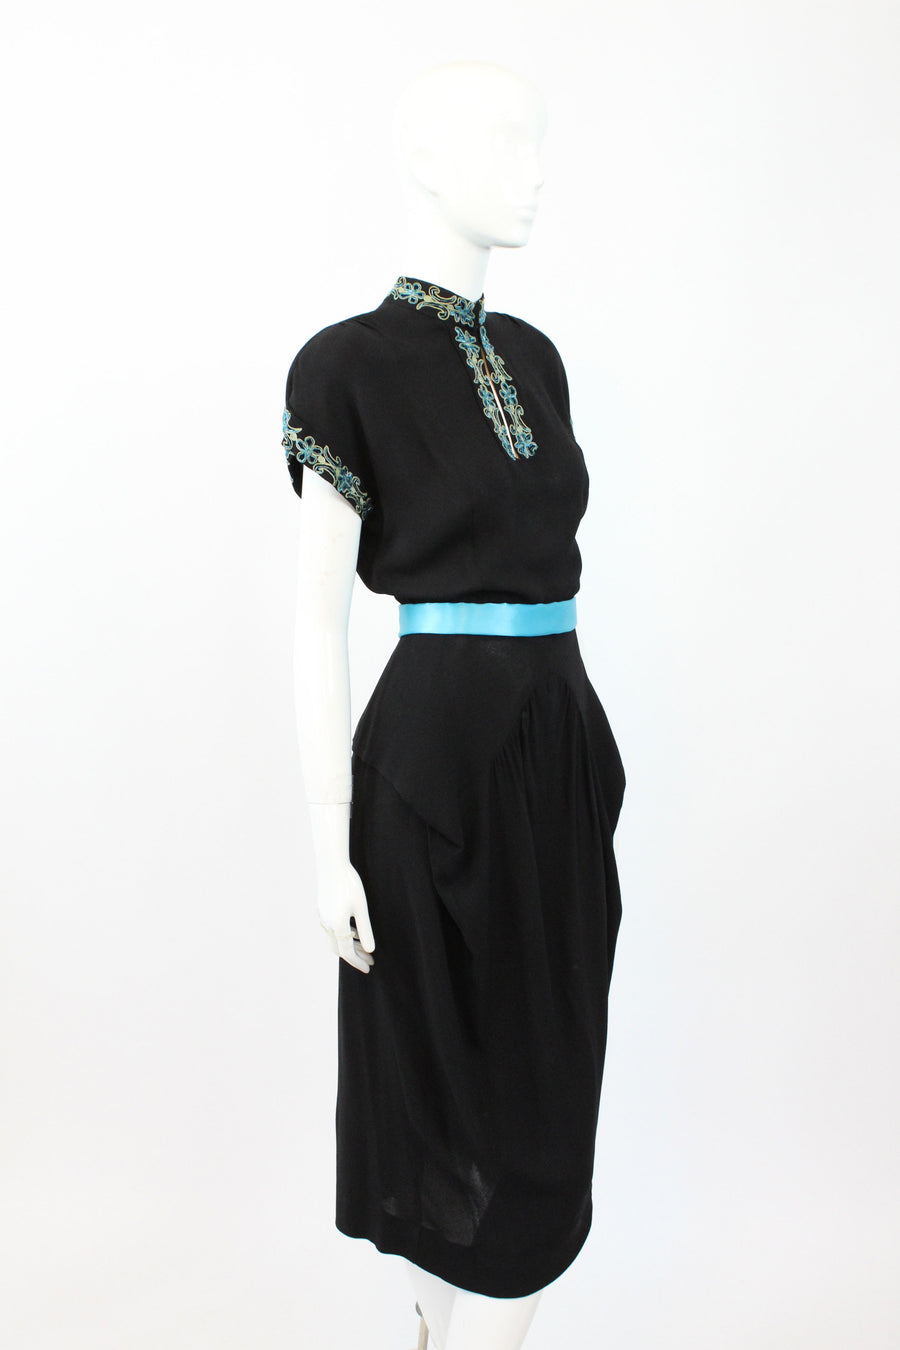 1940s rayon beaded dress | Asian inspired | medium